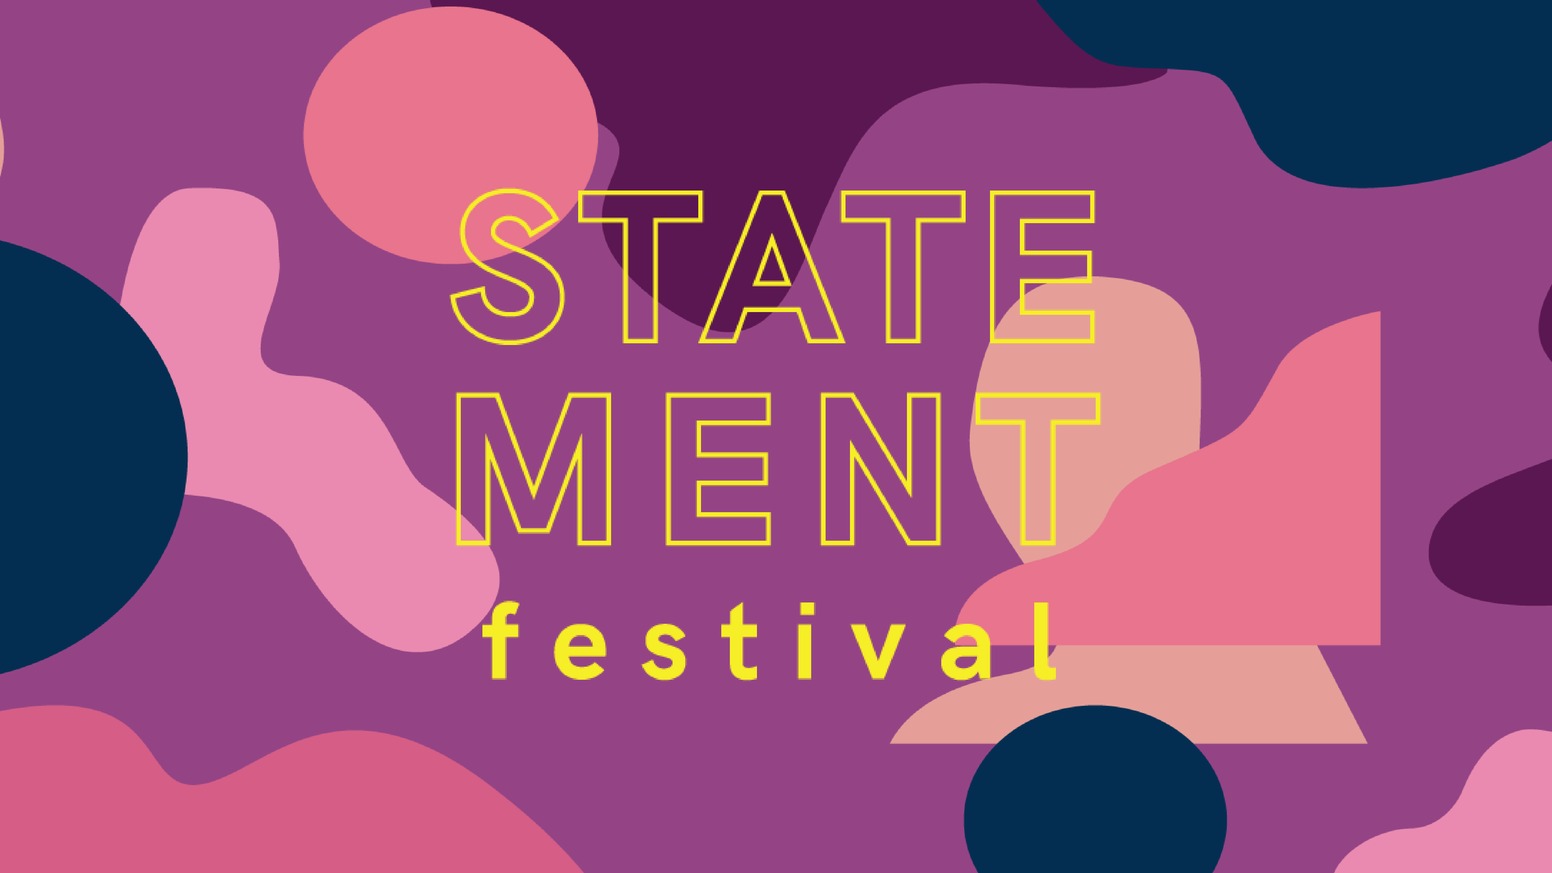 Let's make a statement! Let's make a festival! A Statement Festival!